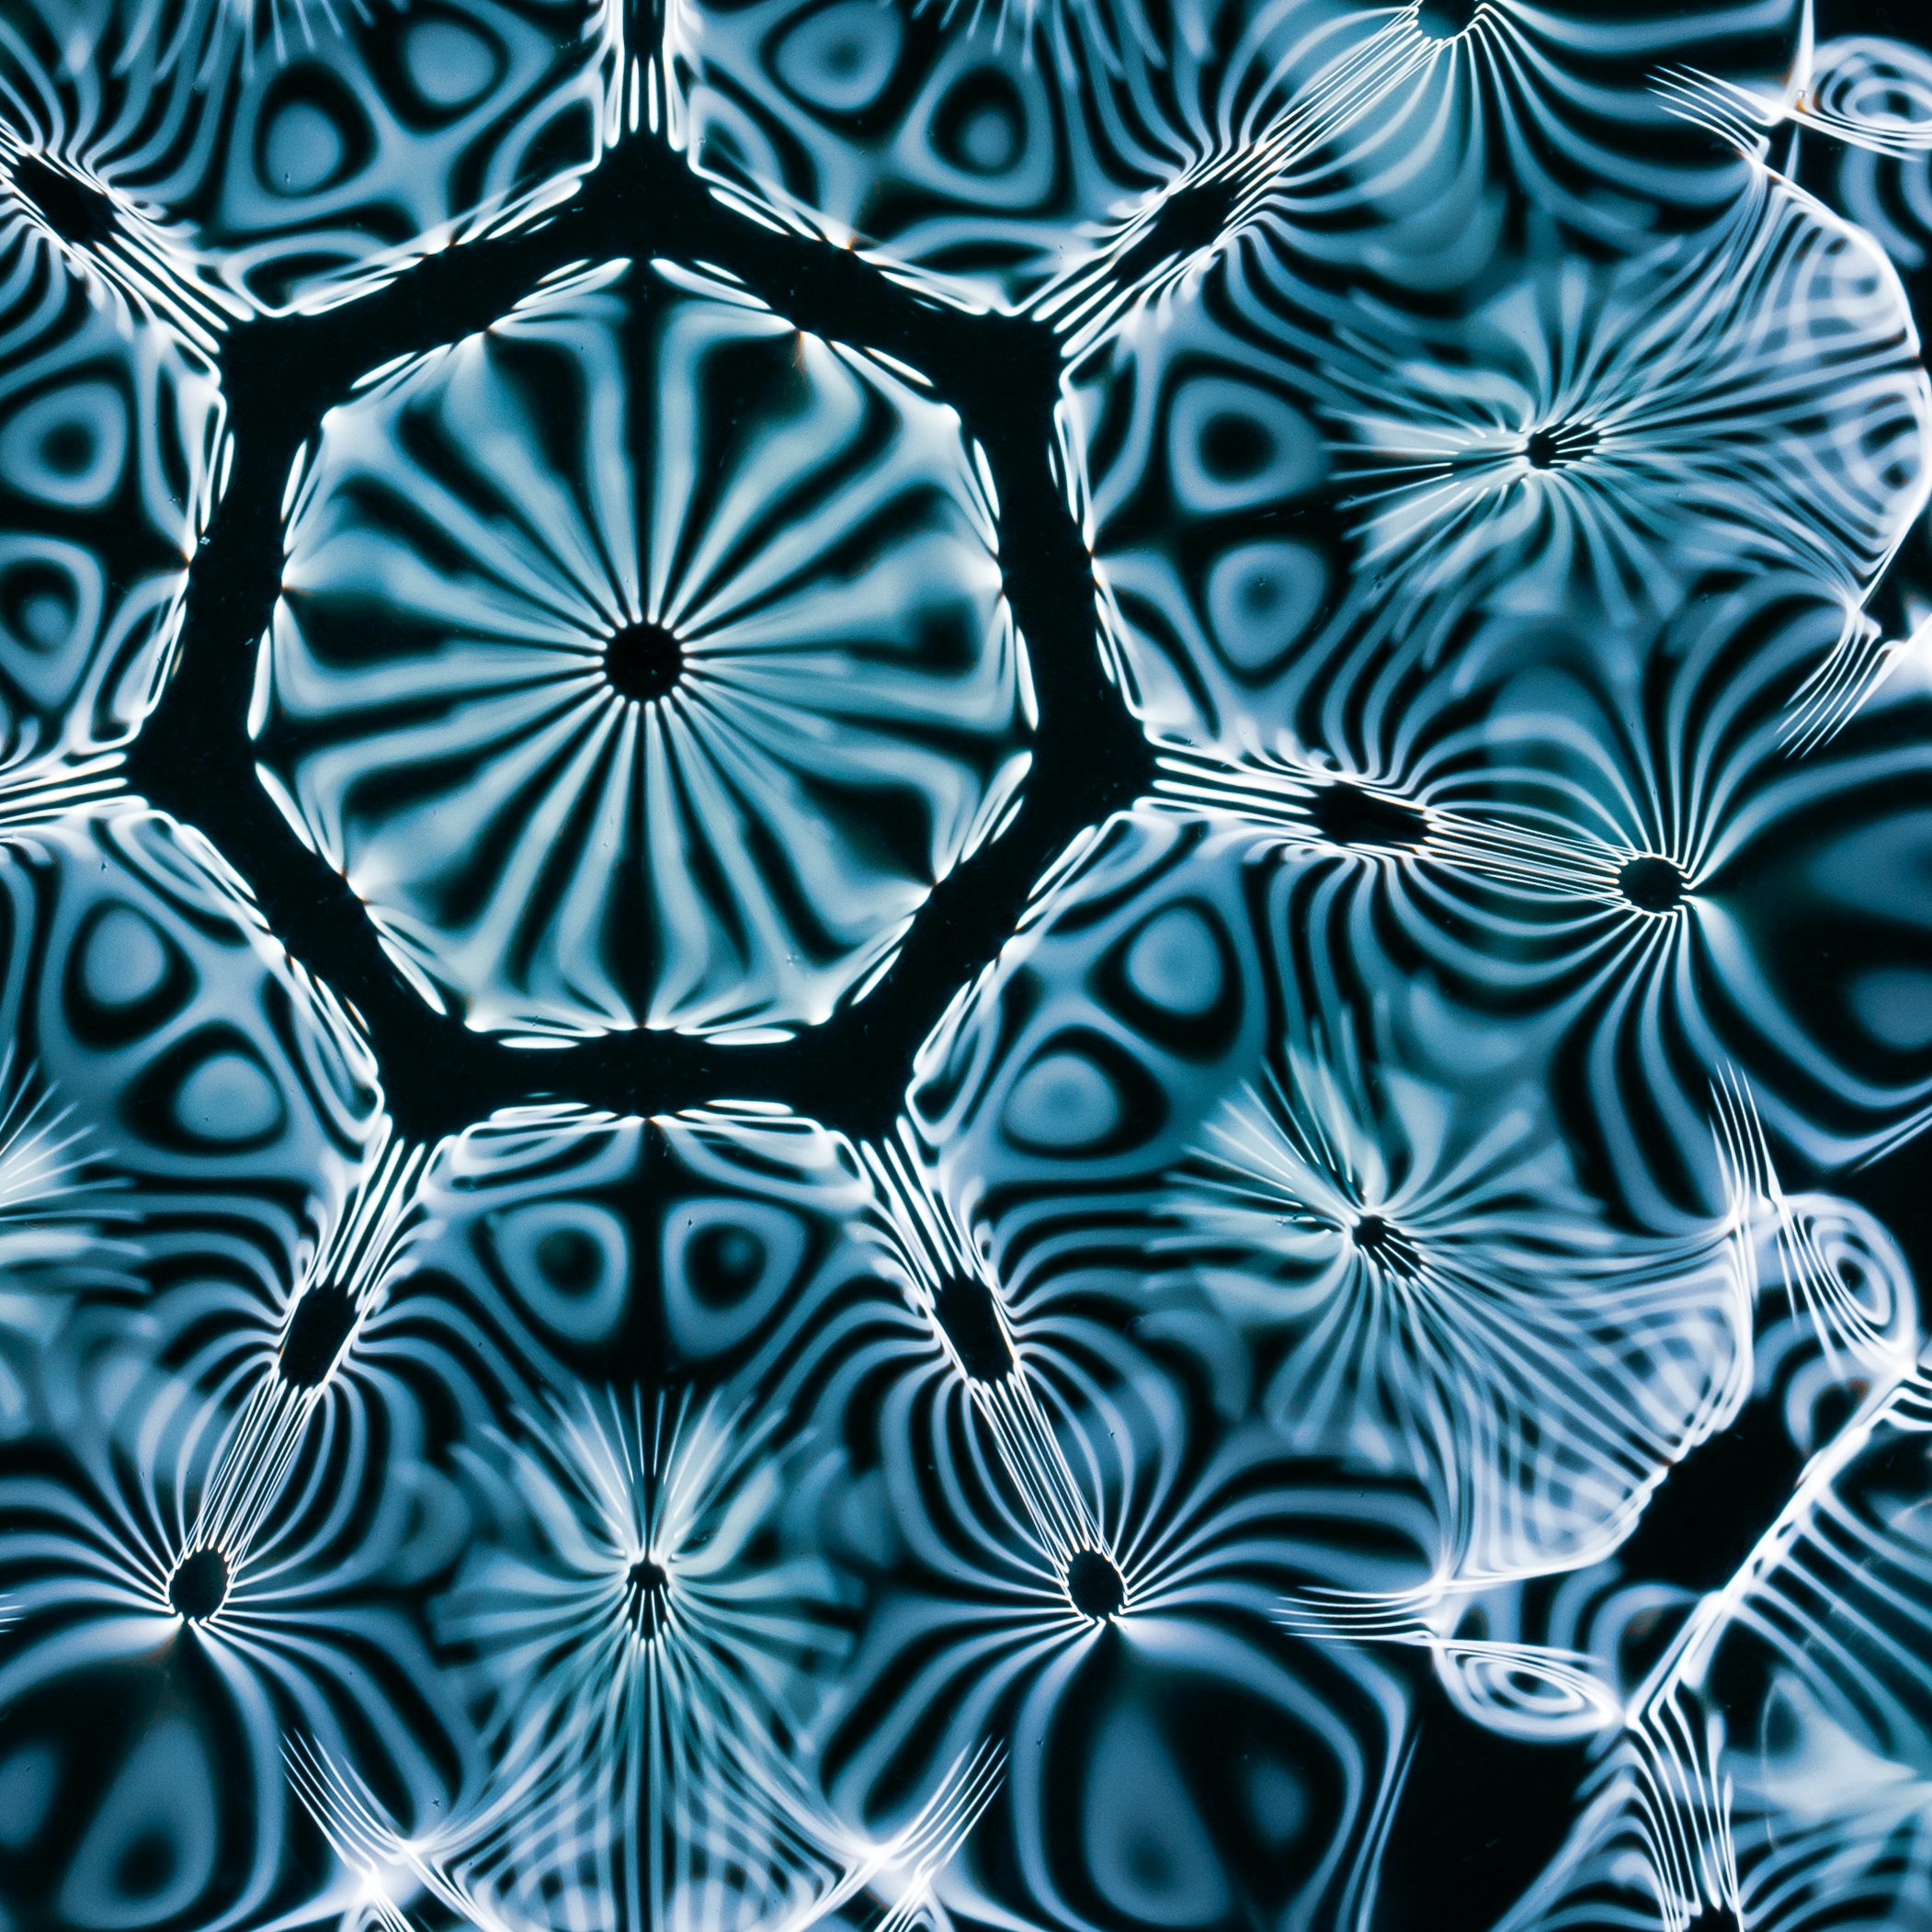 close up 29Hz (Note A#) Cymatics photography Fine Art Print by Journey of Curiosity